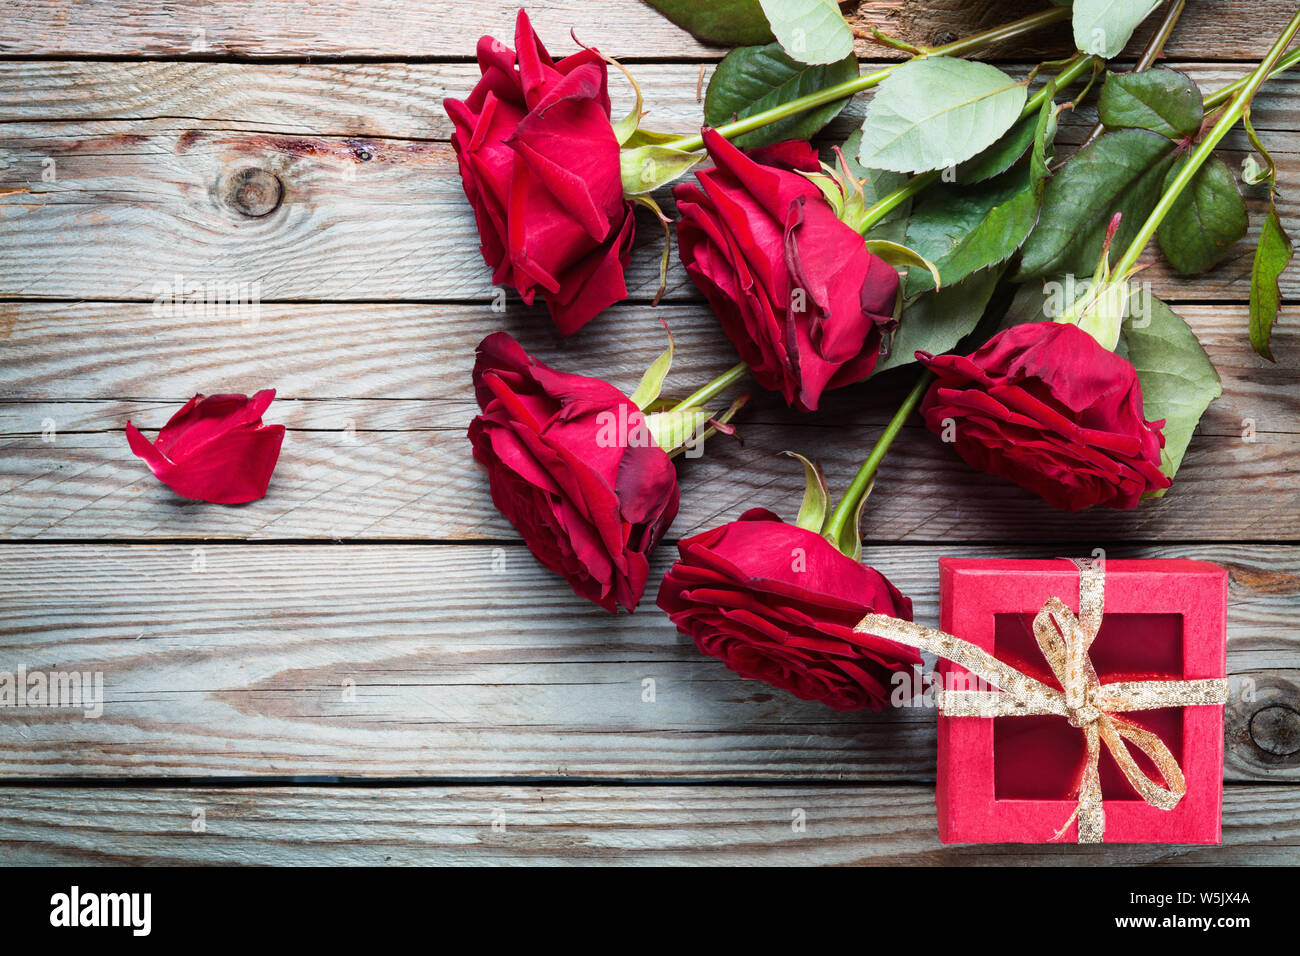 Strauß roter Rosen auf Holz rustikale Hintergrund. Stockfoto